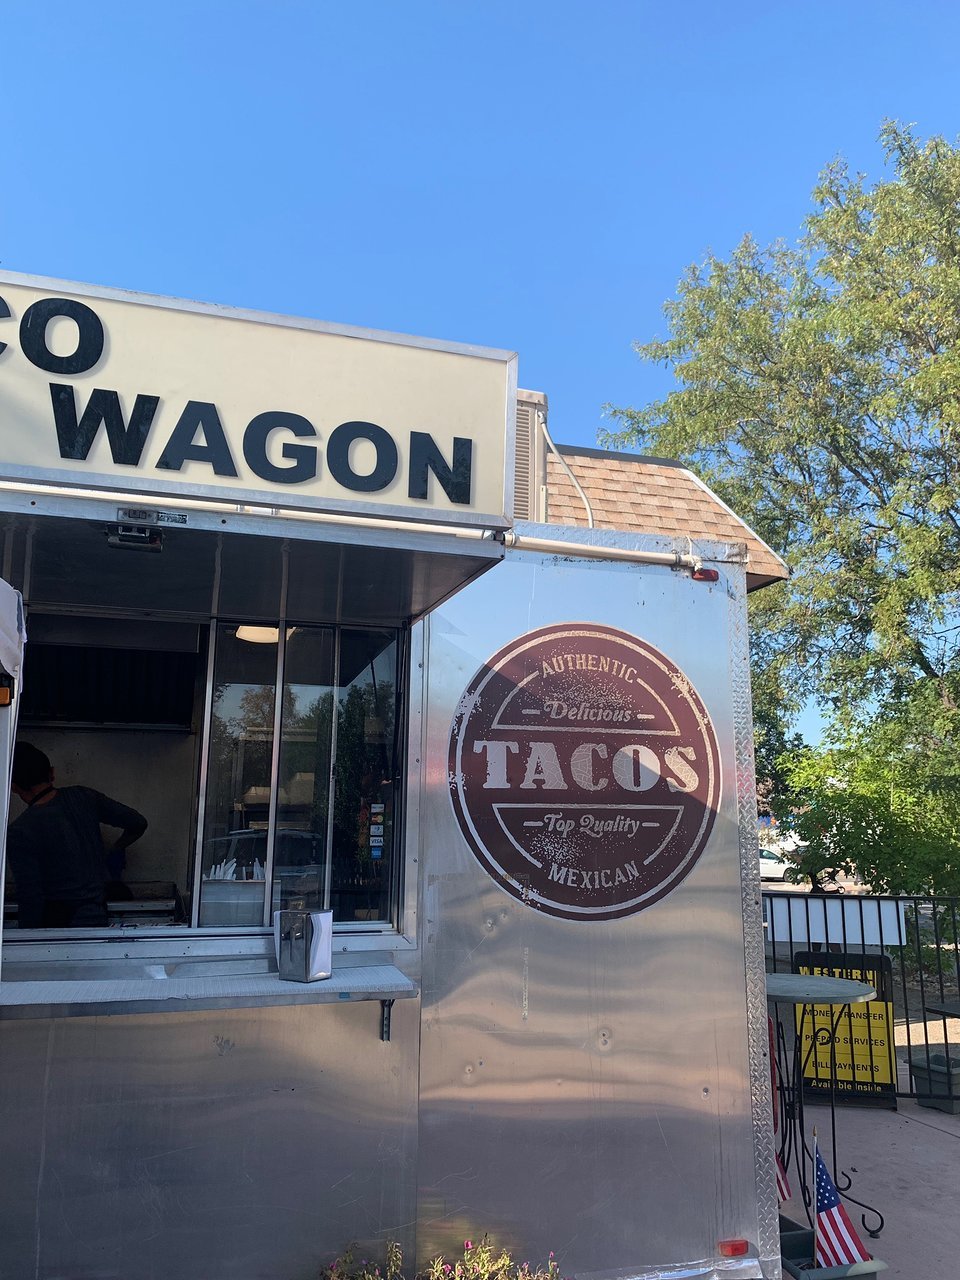 Taco wagon